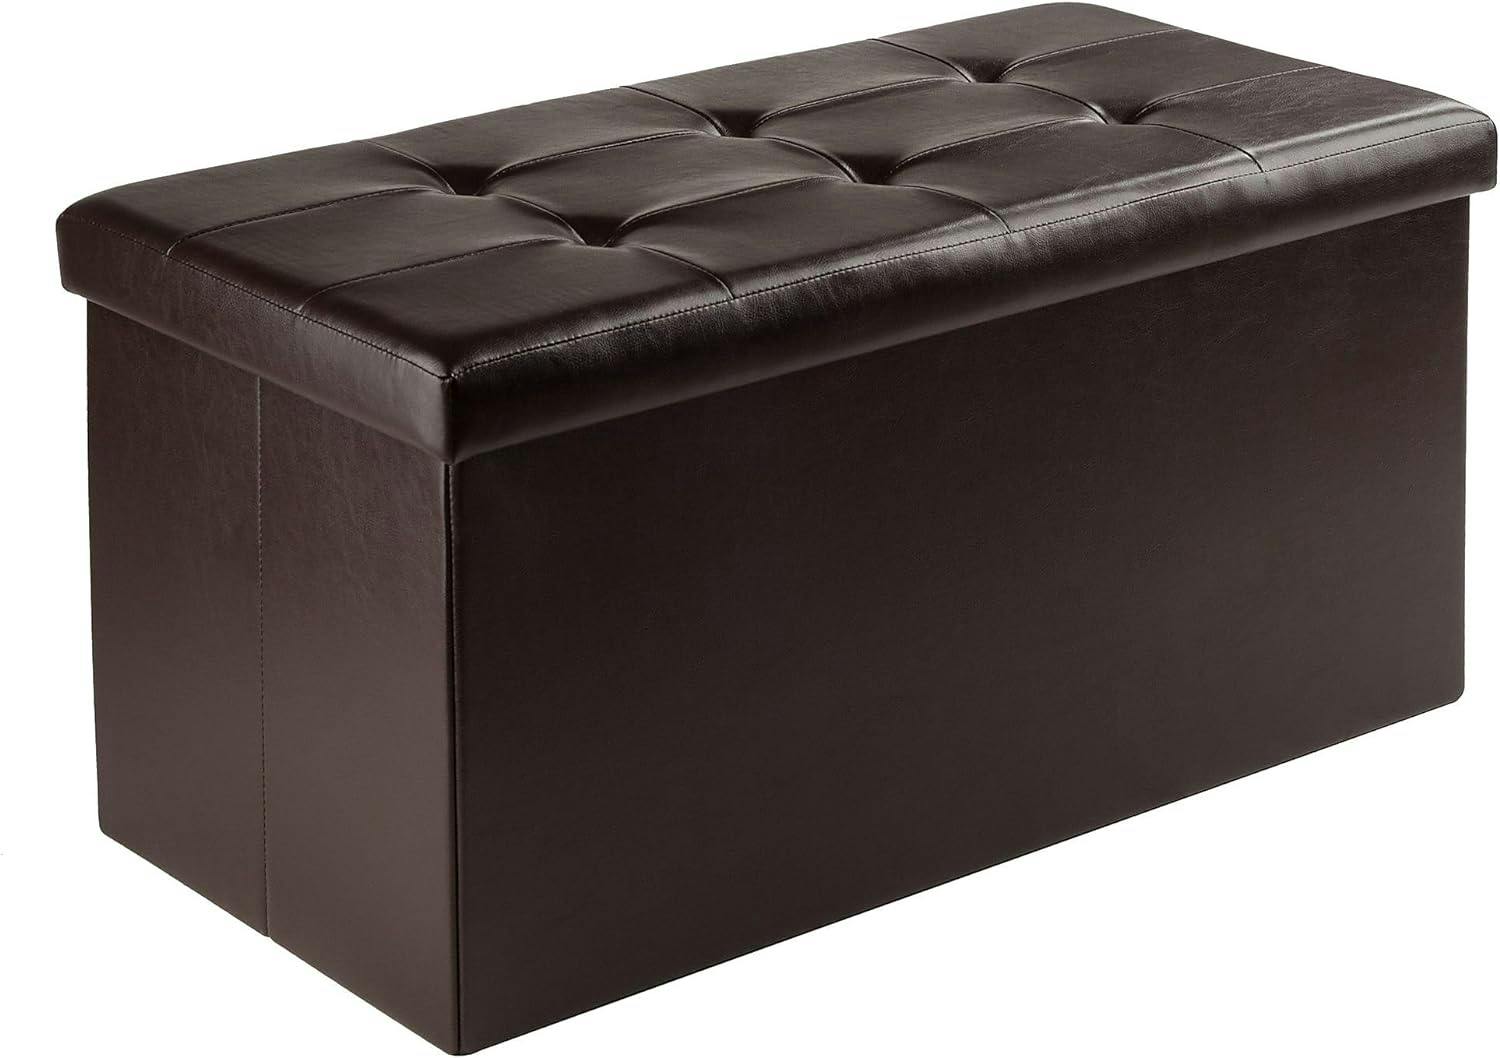 Espresso Faux Leather Foldable Storage Ottoman 29.9"